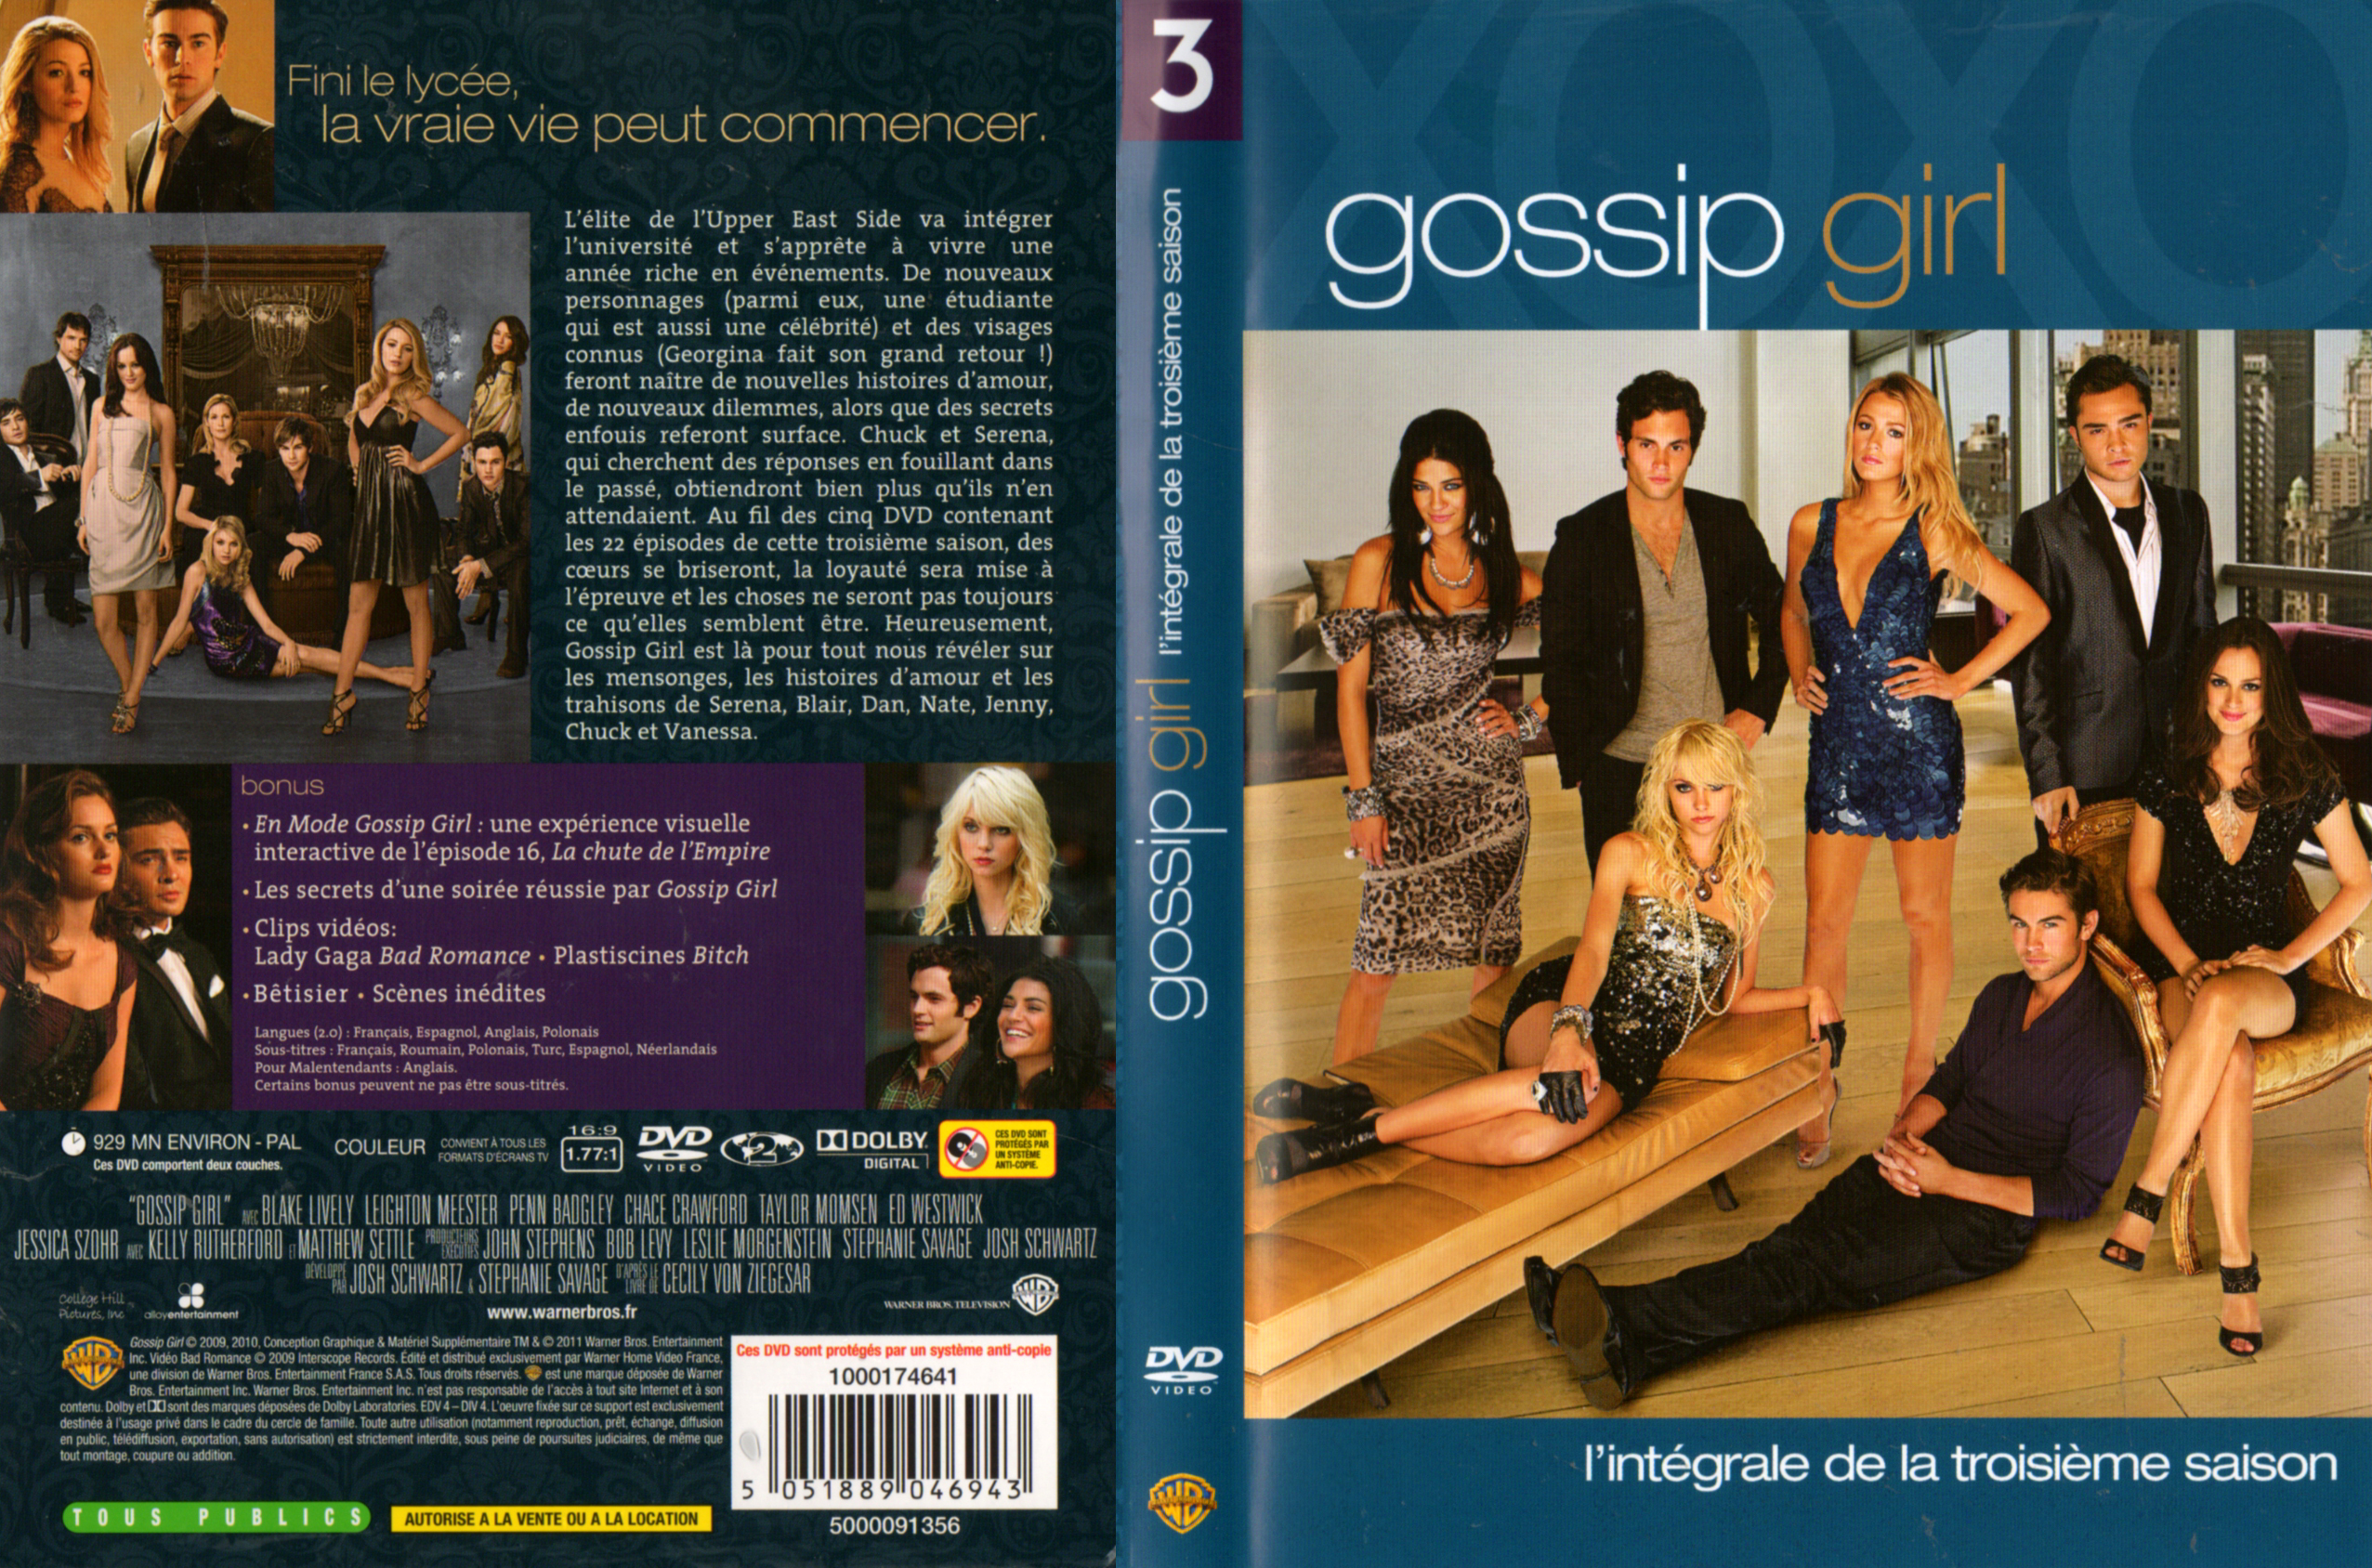 Jaquette DVD Gossip girl Saison 3 COFFRET